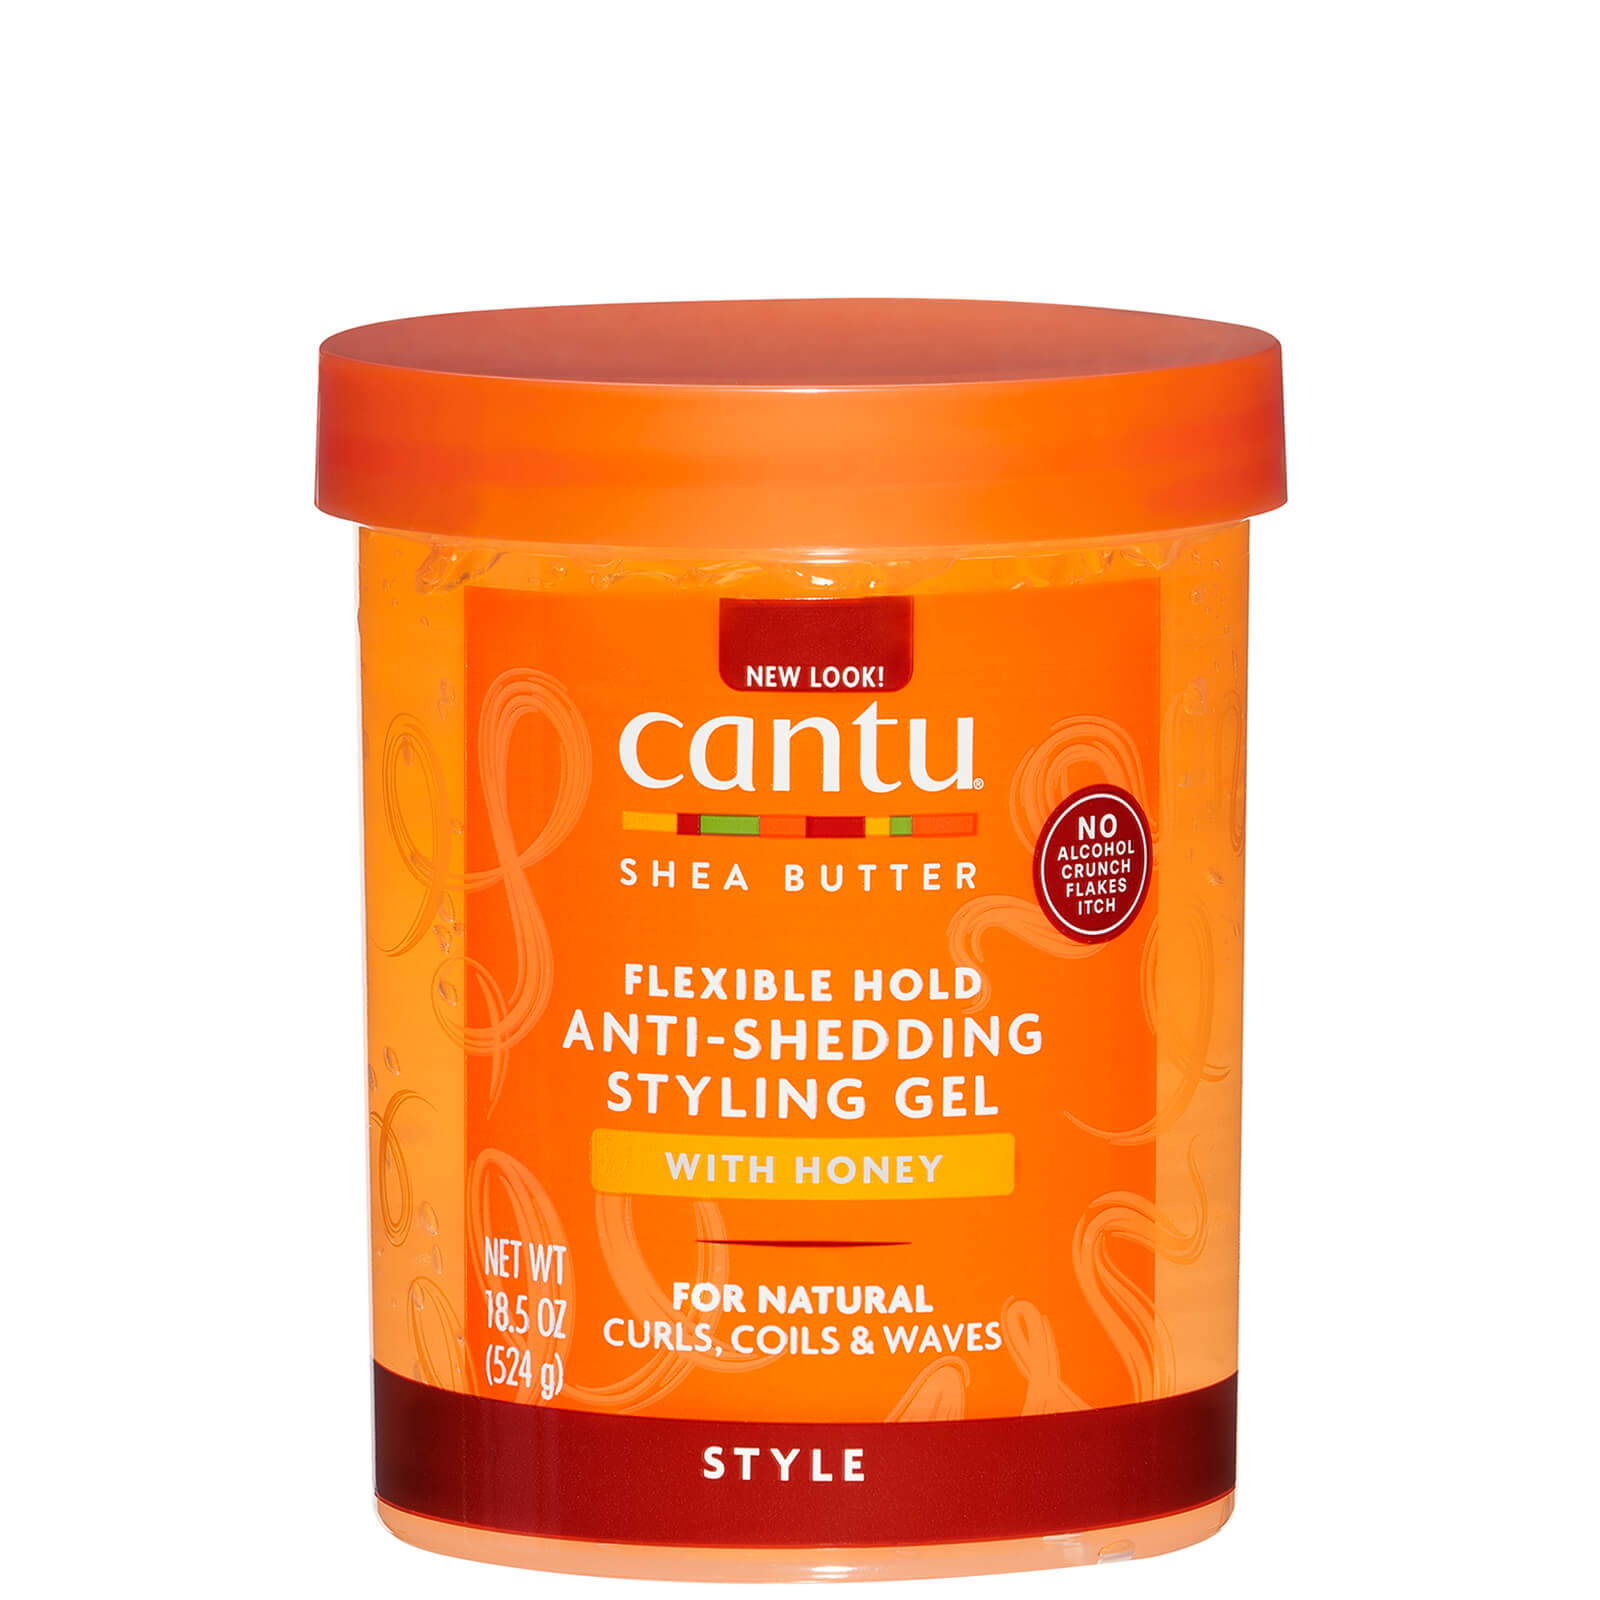 Image of Cantu Shea Butter Maximum Hold Anti-Shedding Styling Gel with Honey 18.5 oz